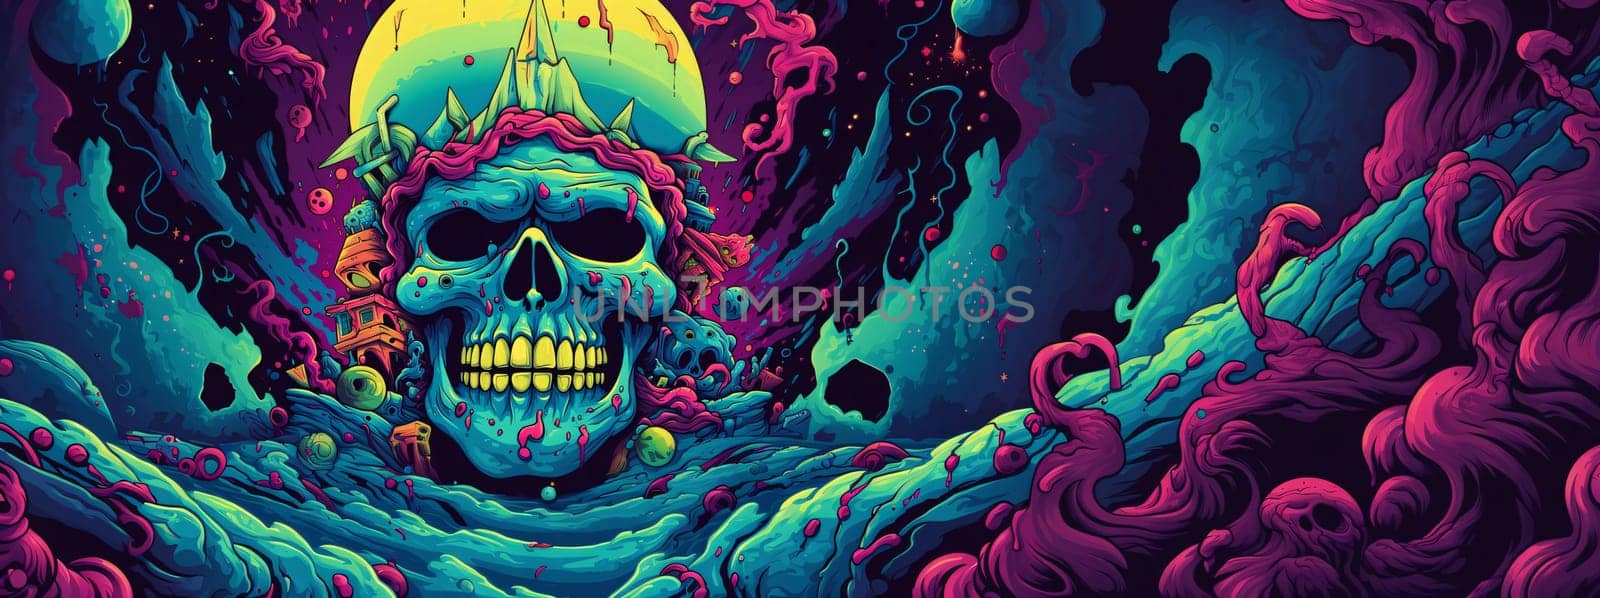 Skull in the sea. Vector illustration of a cartoon skull. by ThemesS